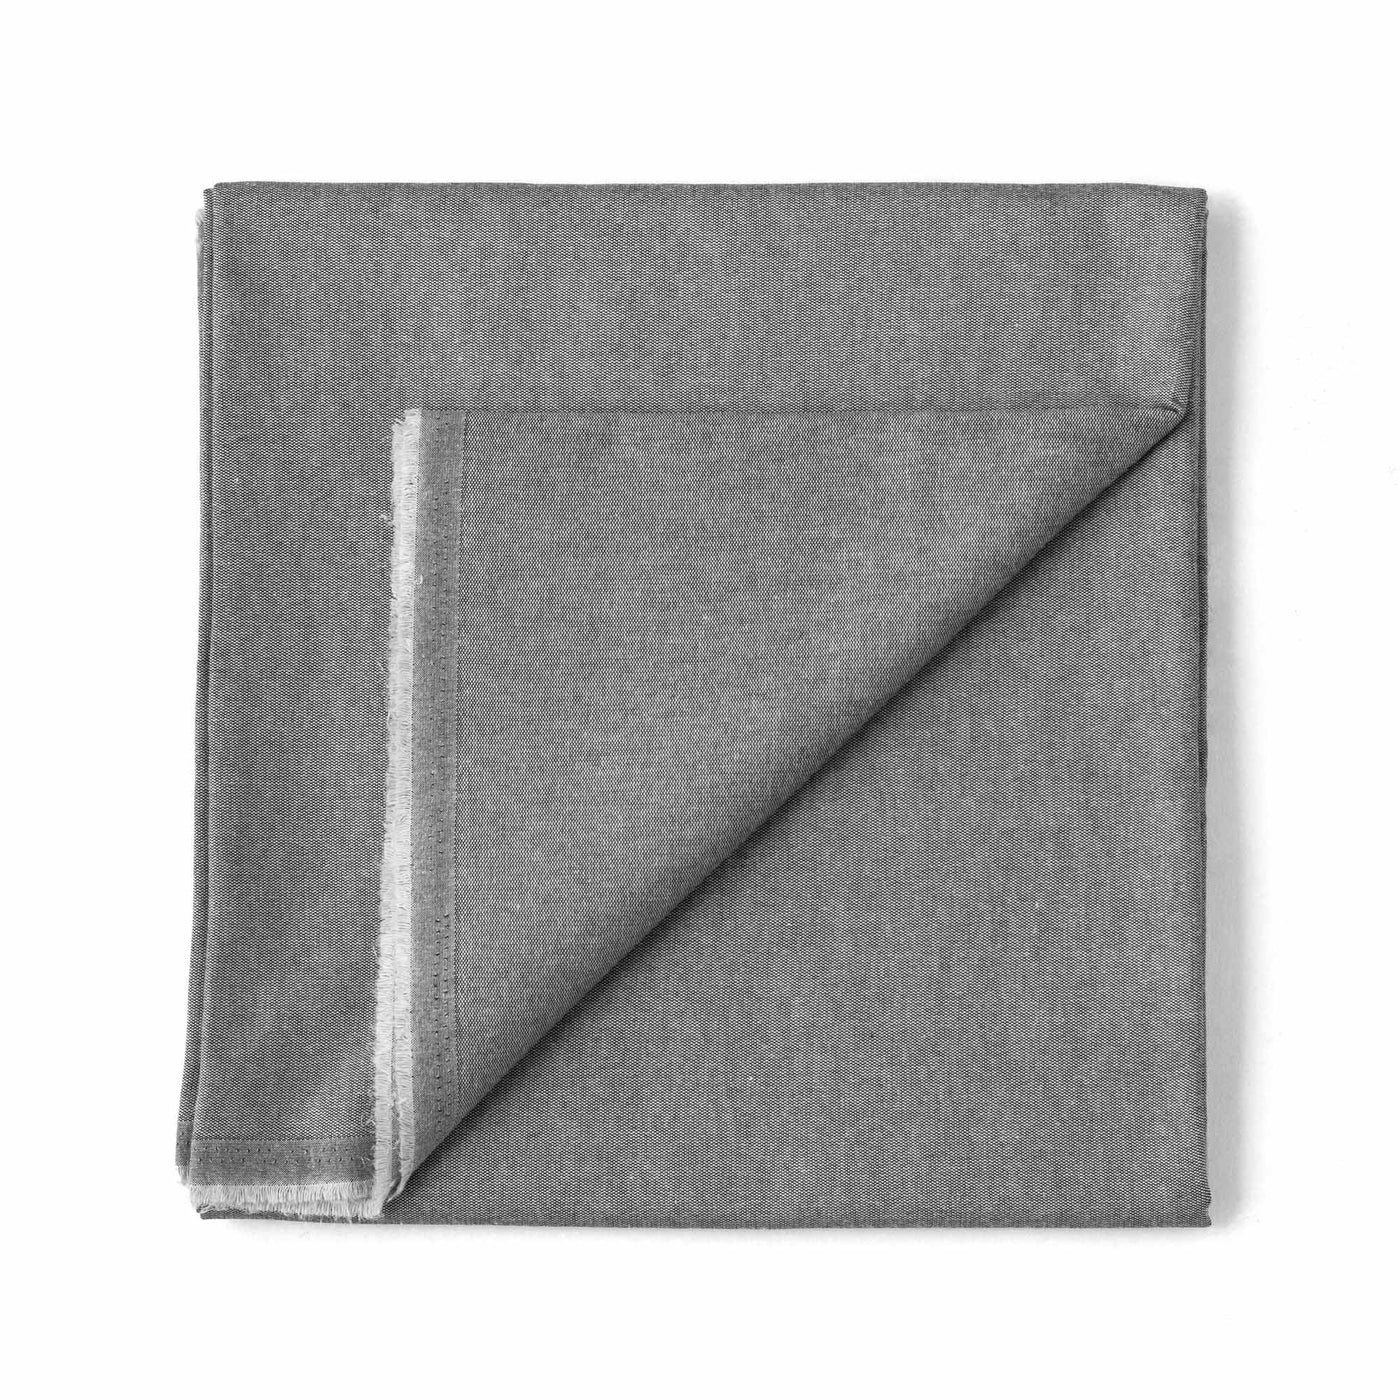 Fabric Pandit Fabric Men's Black Oxford Cotton Shirting Fabric (Width 58 inch)